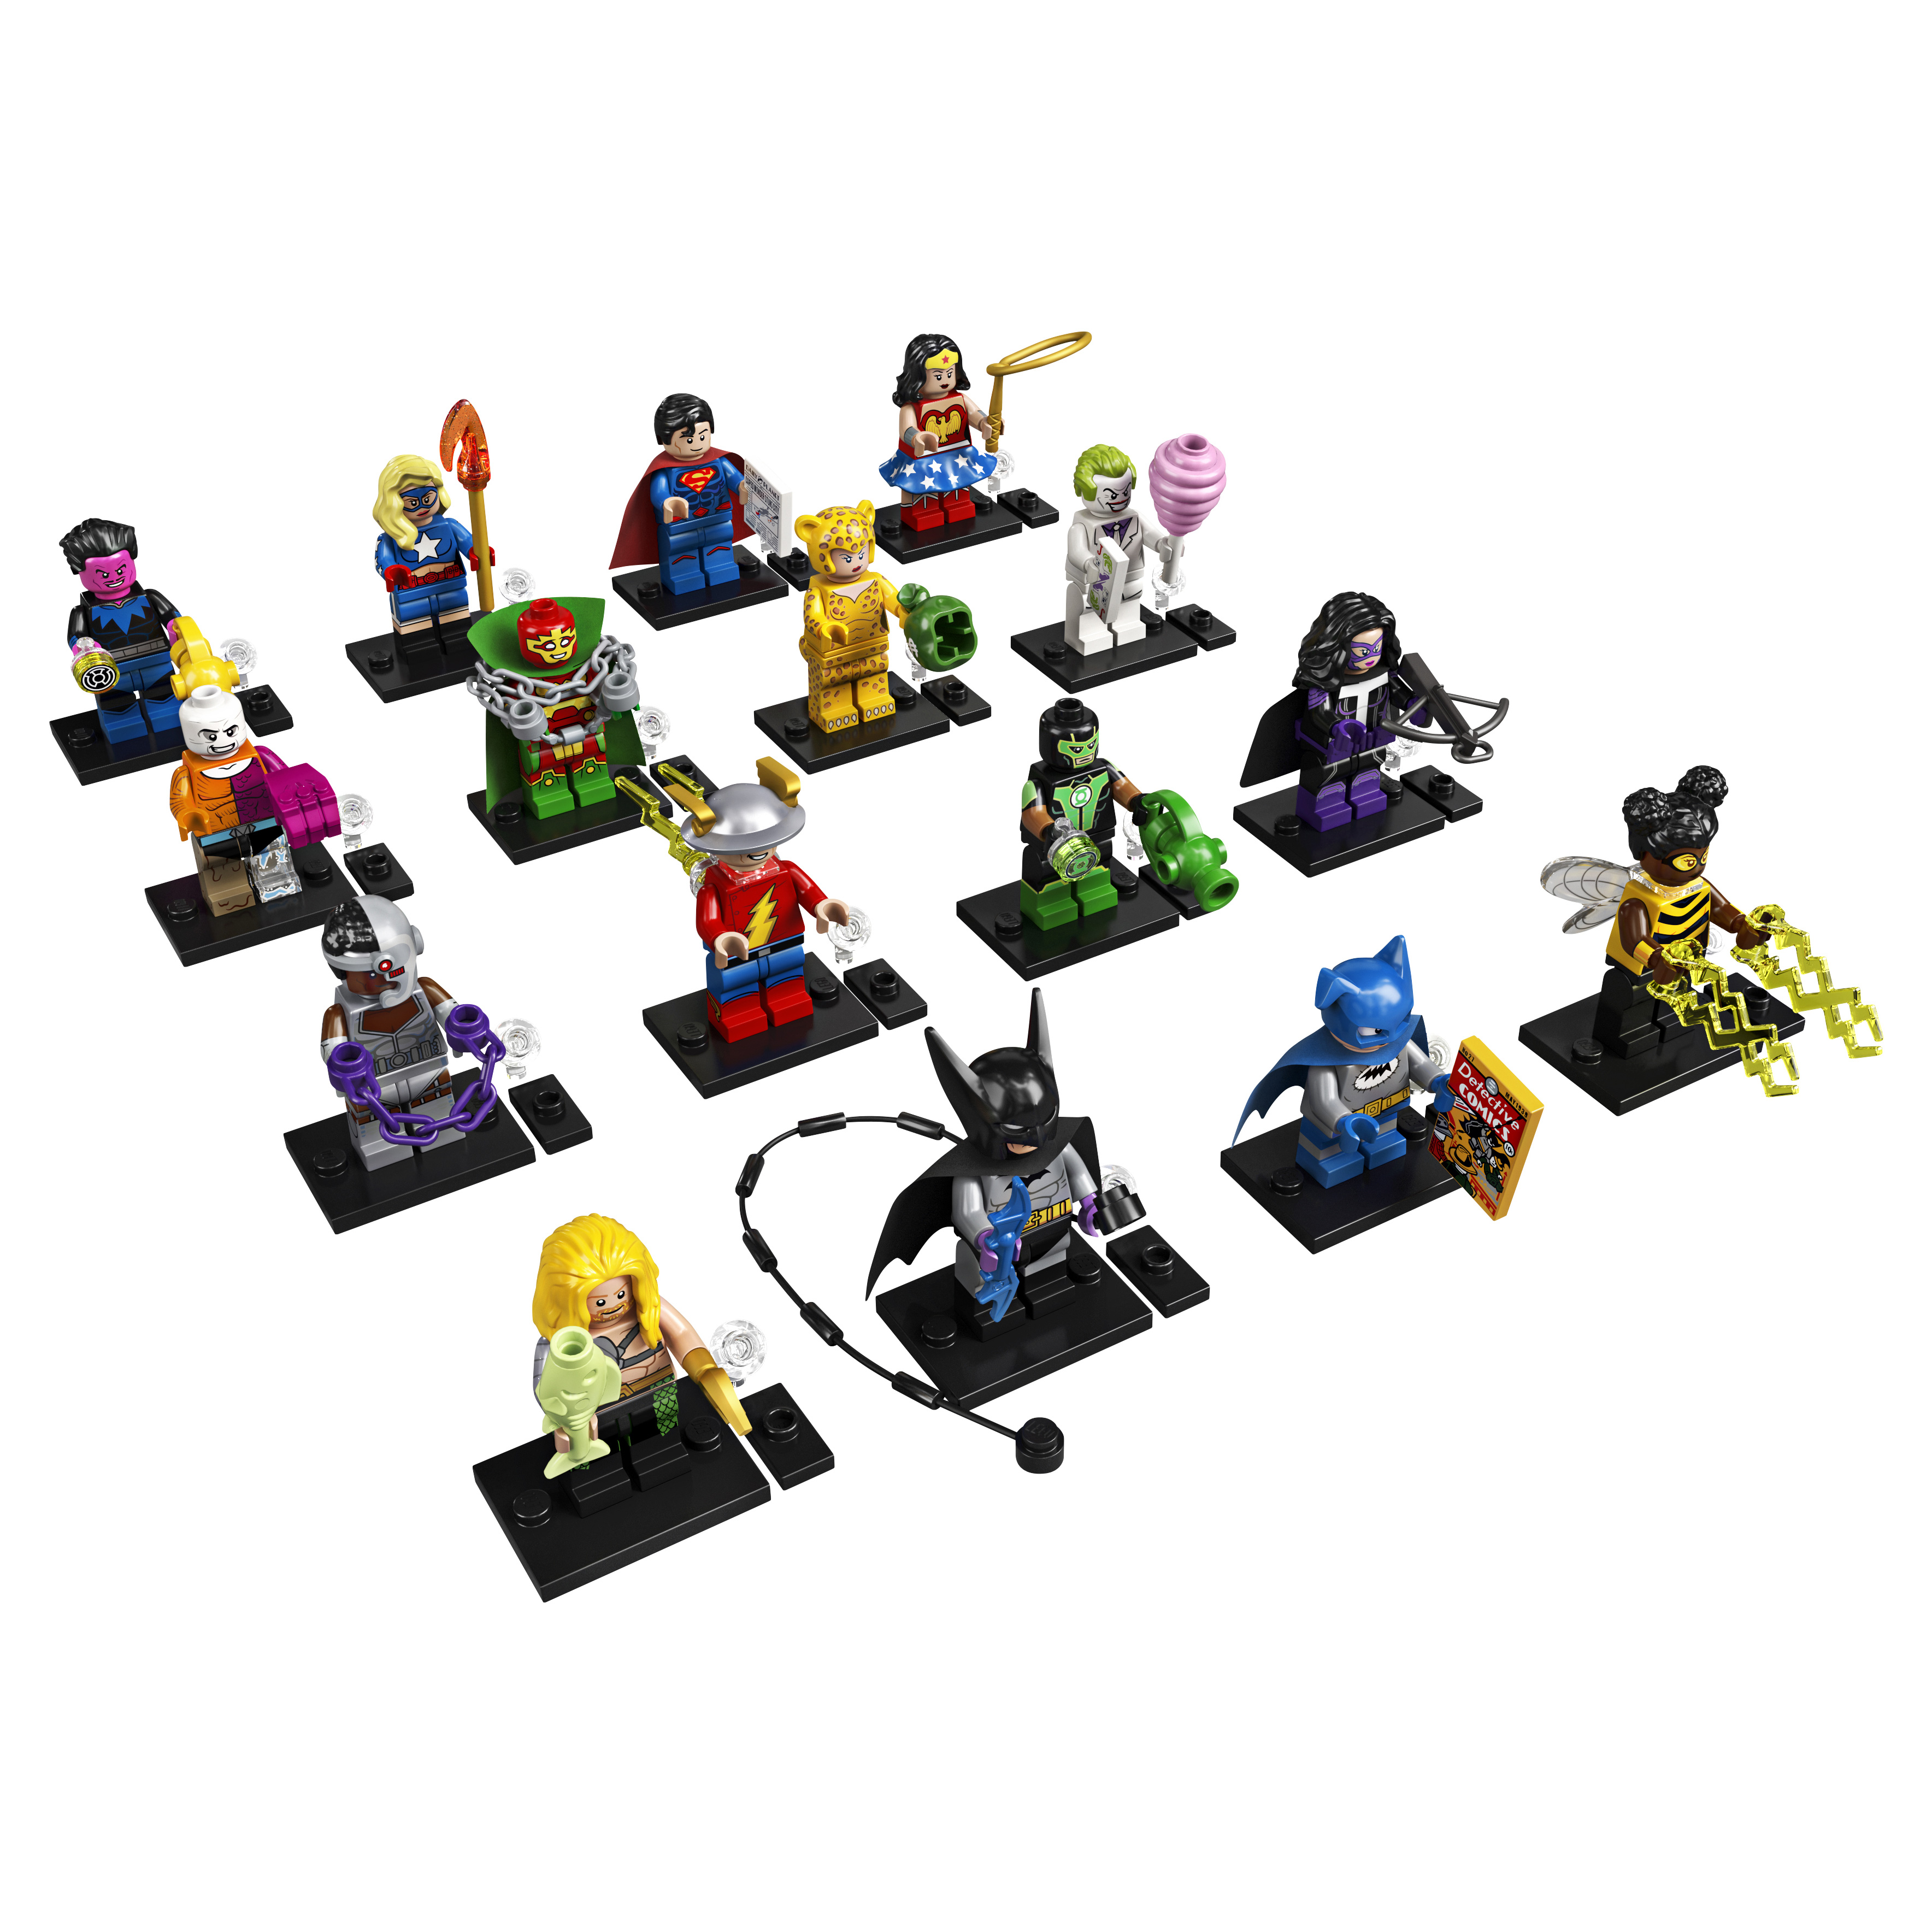 Конструктор LEGO Minifigures 71026 DC Super Heroes Series конструктор td tumbling super track racer 89909 mix 6009747754591